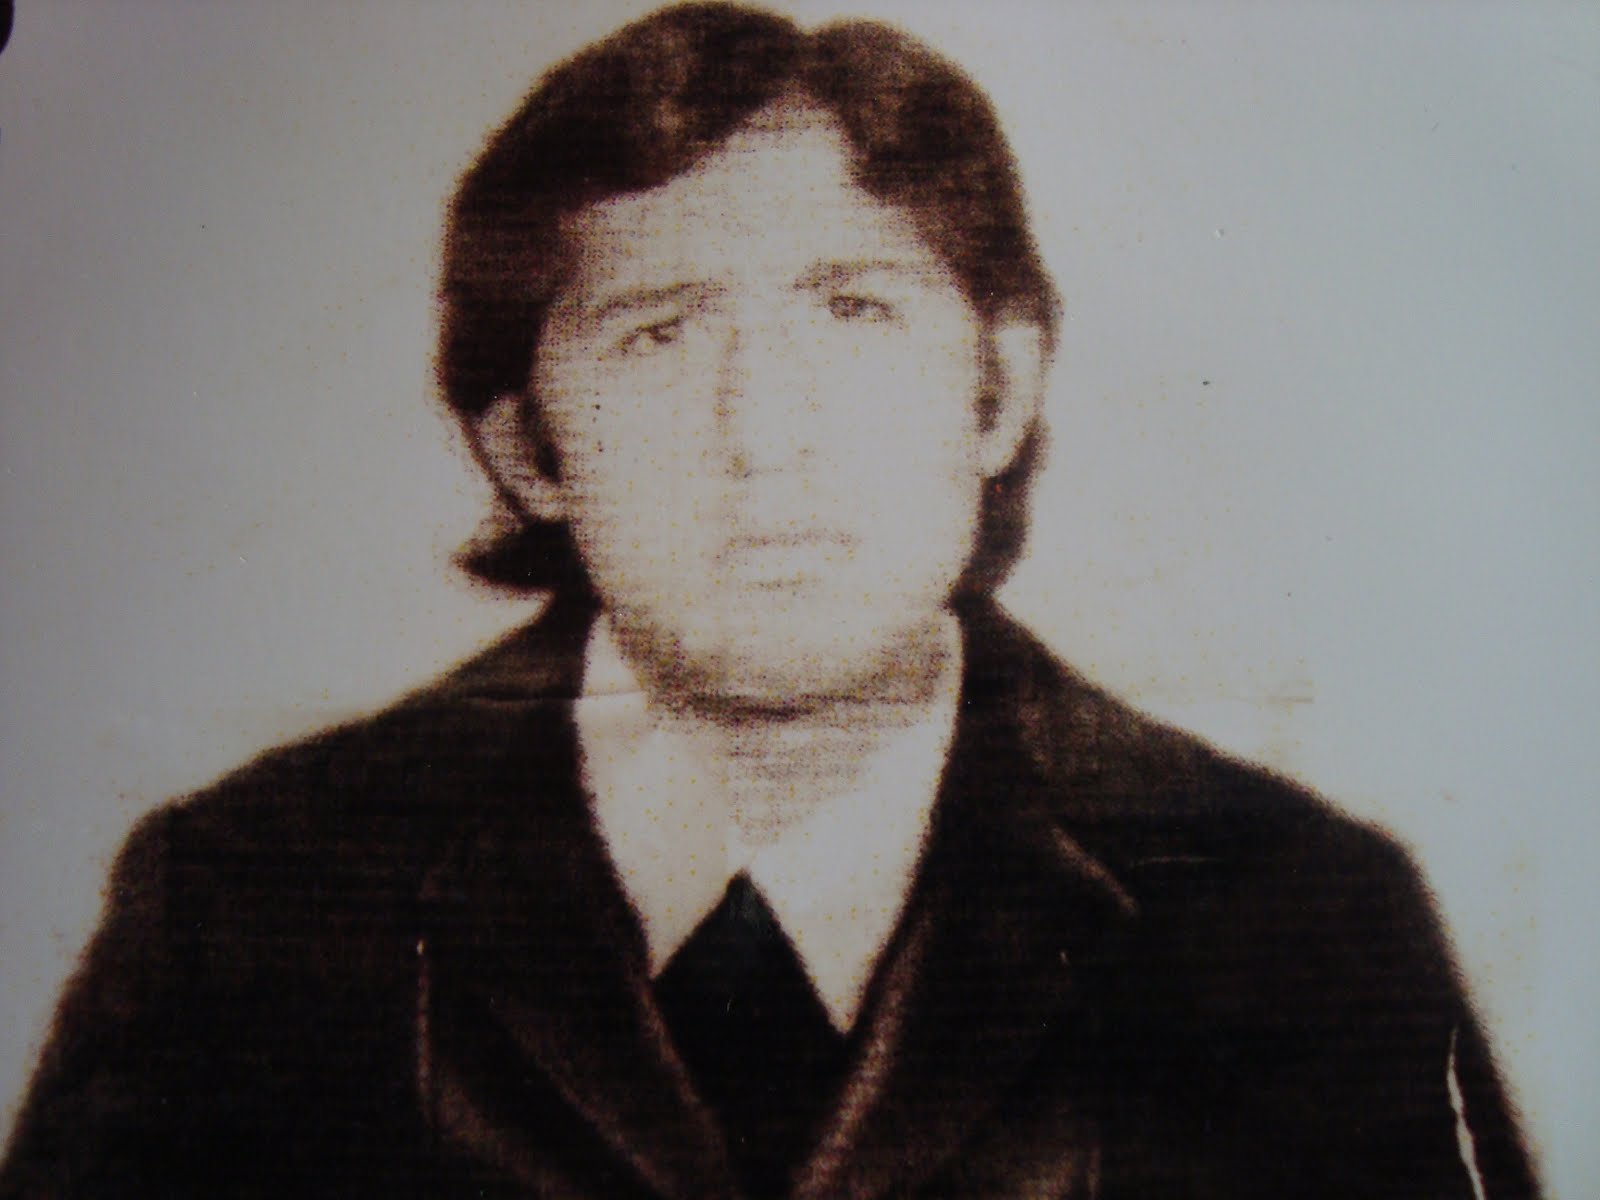 Jose Antonio CORTEZ